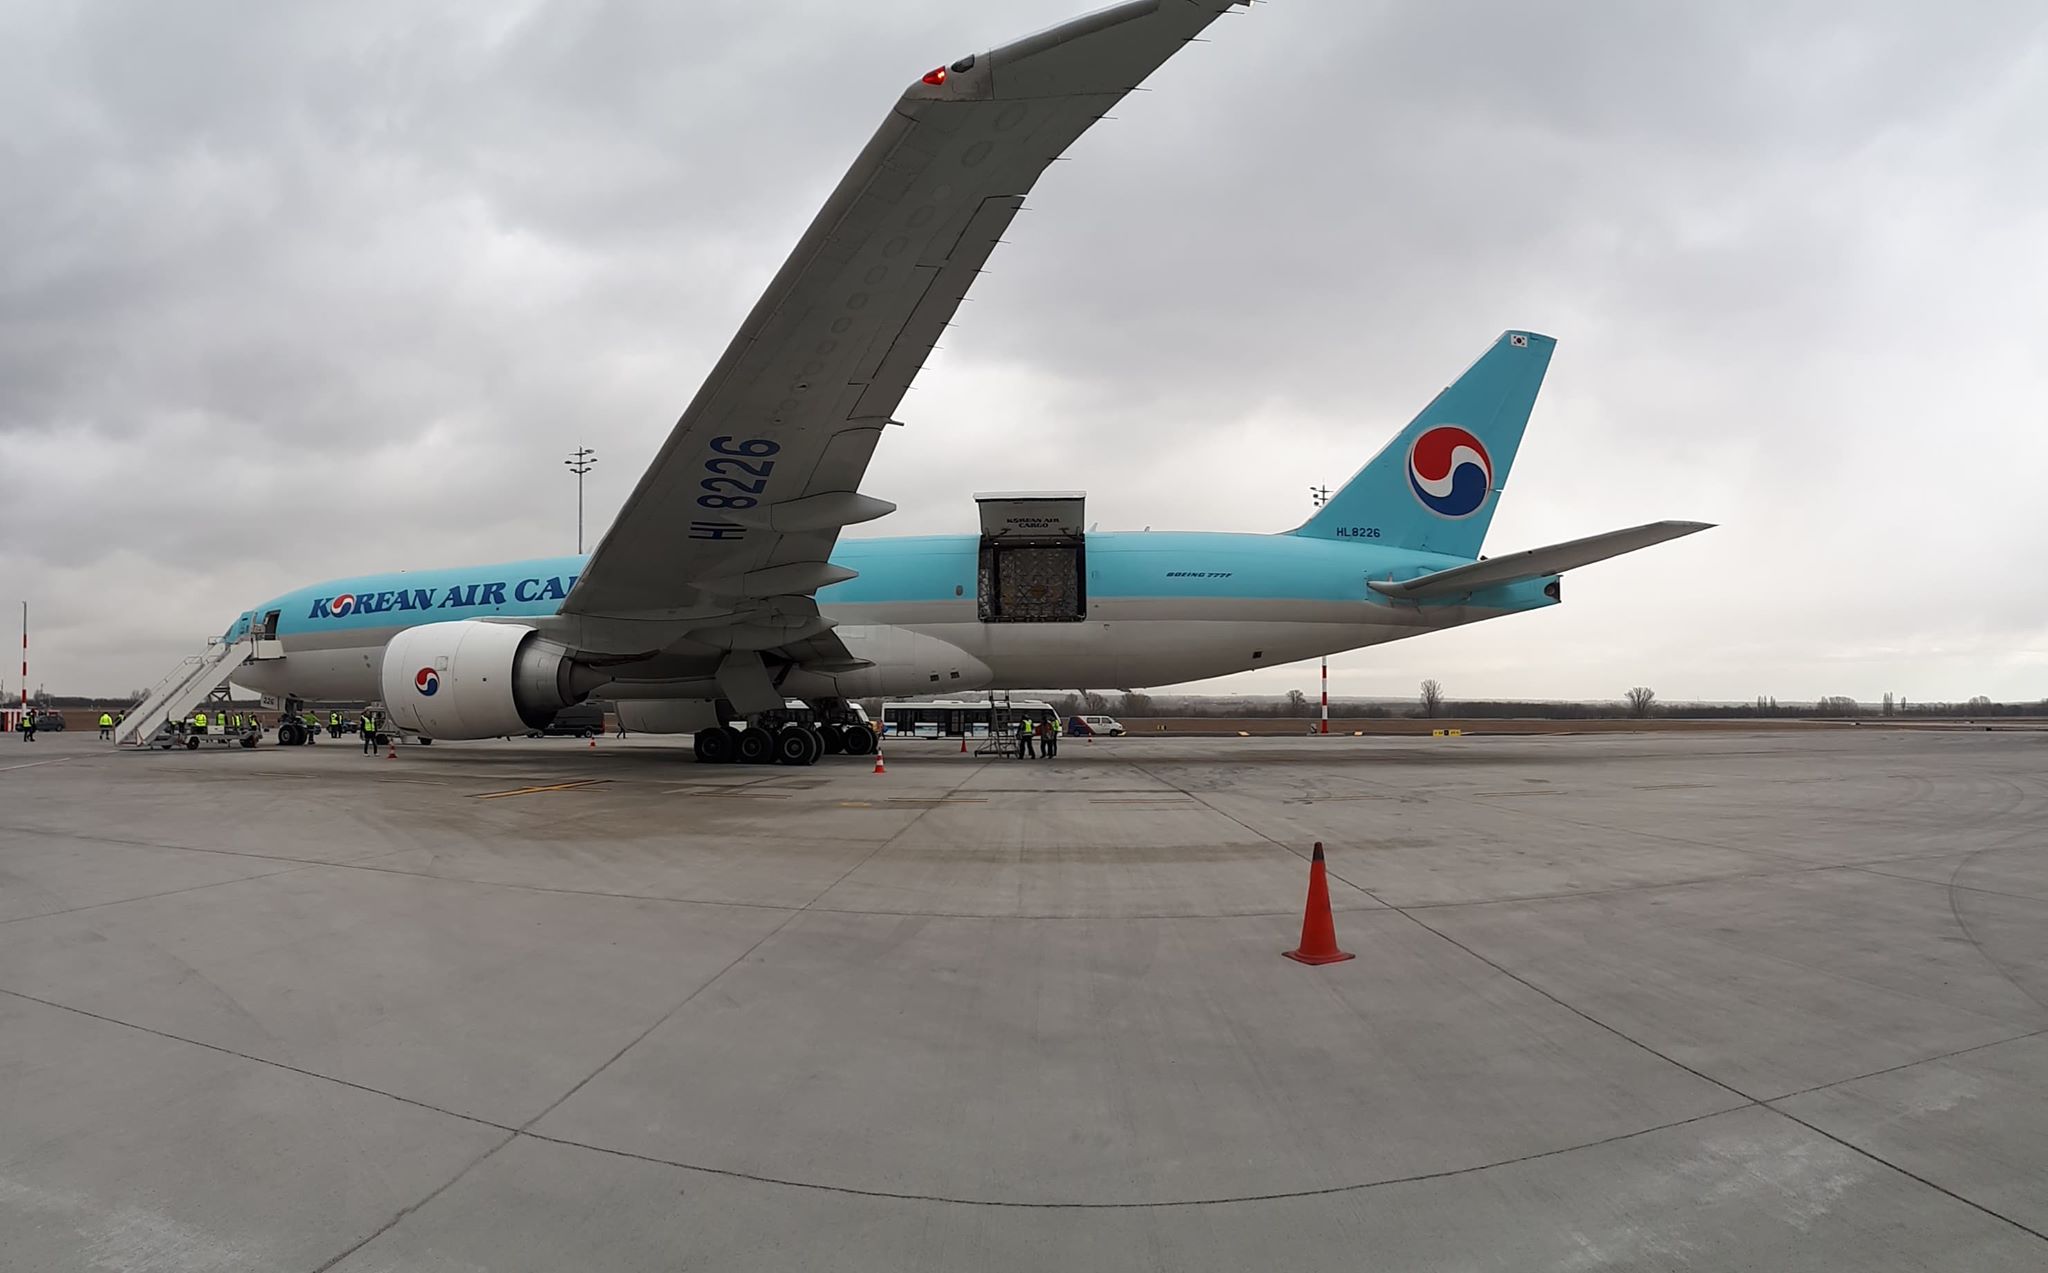 A Korean Air Cargo meg\u00e9rkezett Budapestre! - BUD flyer